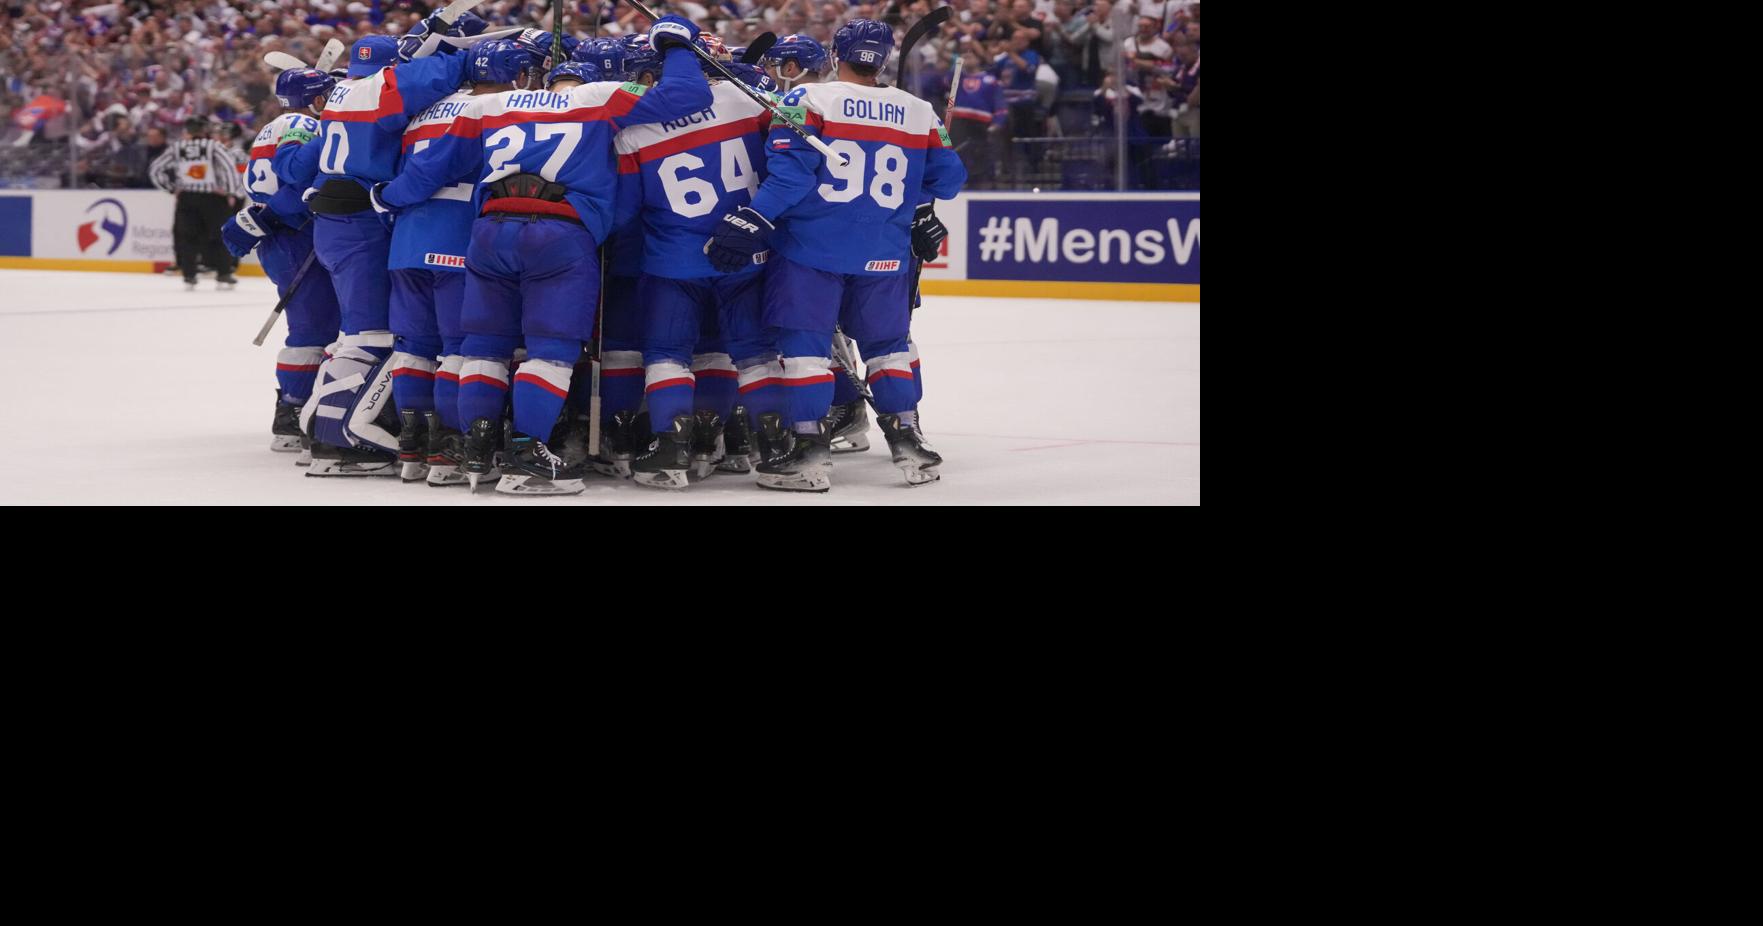 Slovakia opprører USA på overtid i ishockey-VM, Finland slår Norge |  Sport